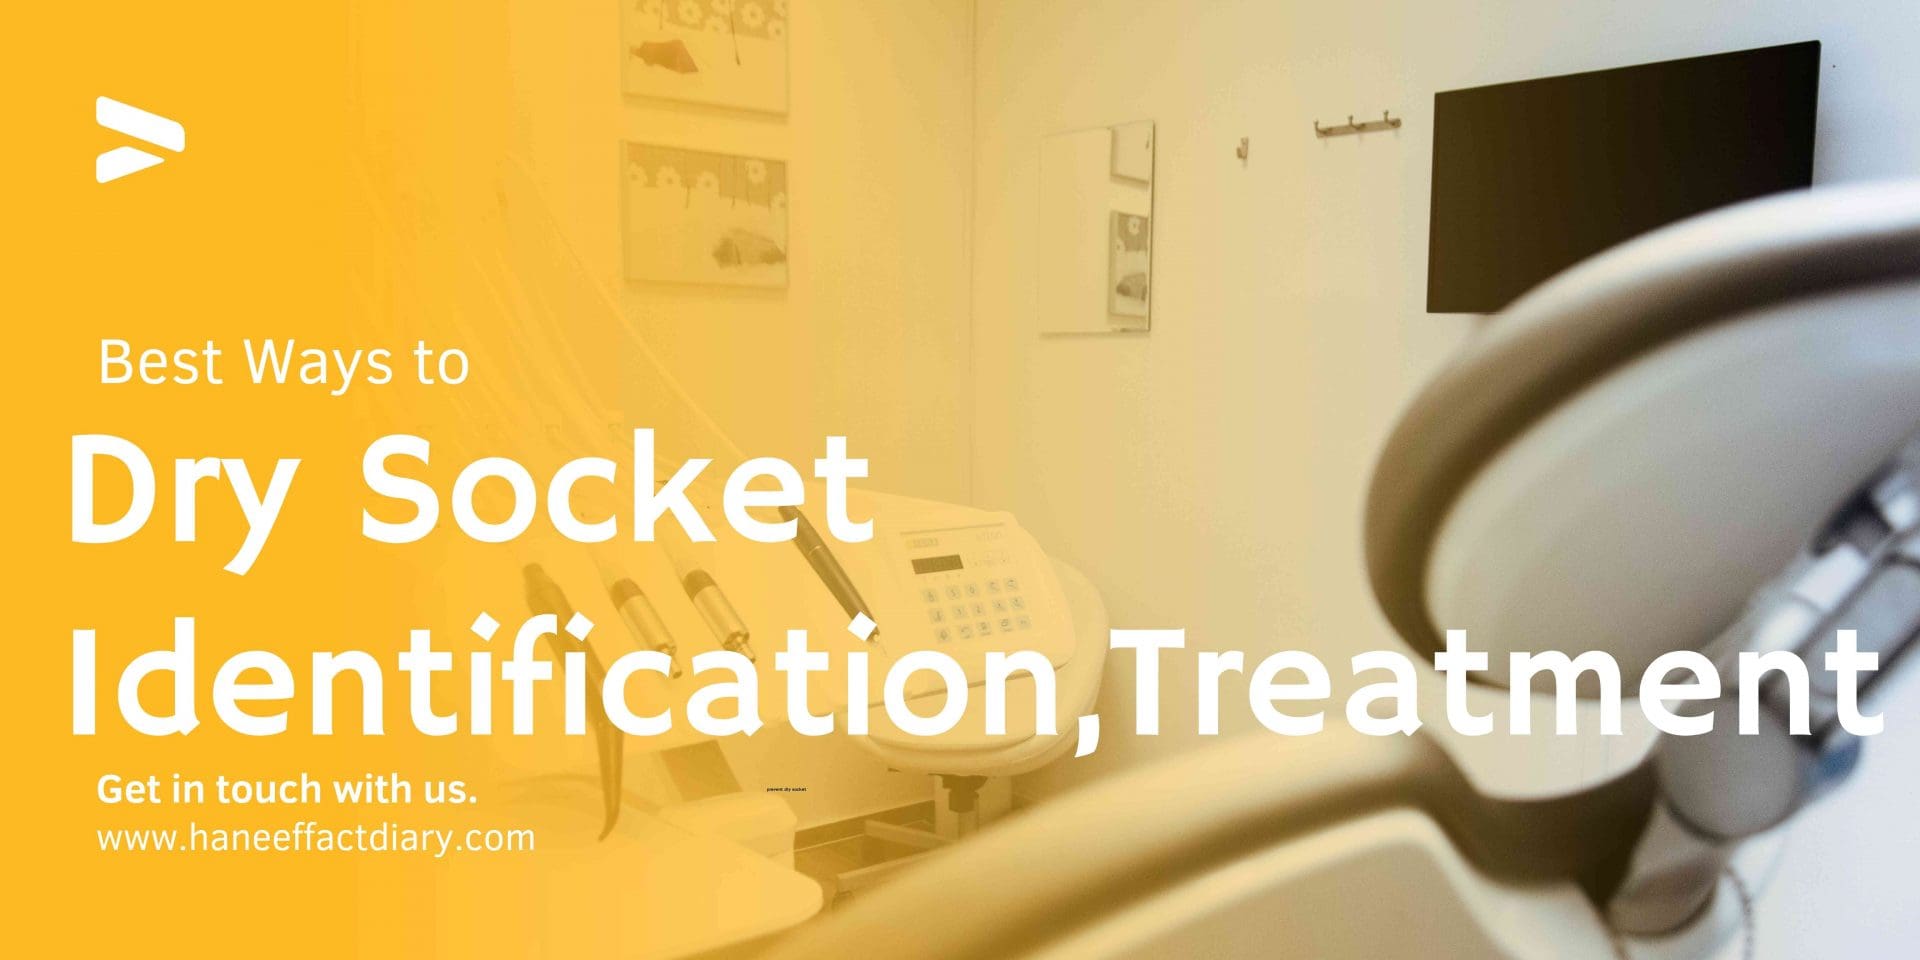 Best Ways to Dry Socket Identification, Treatment 2022